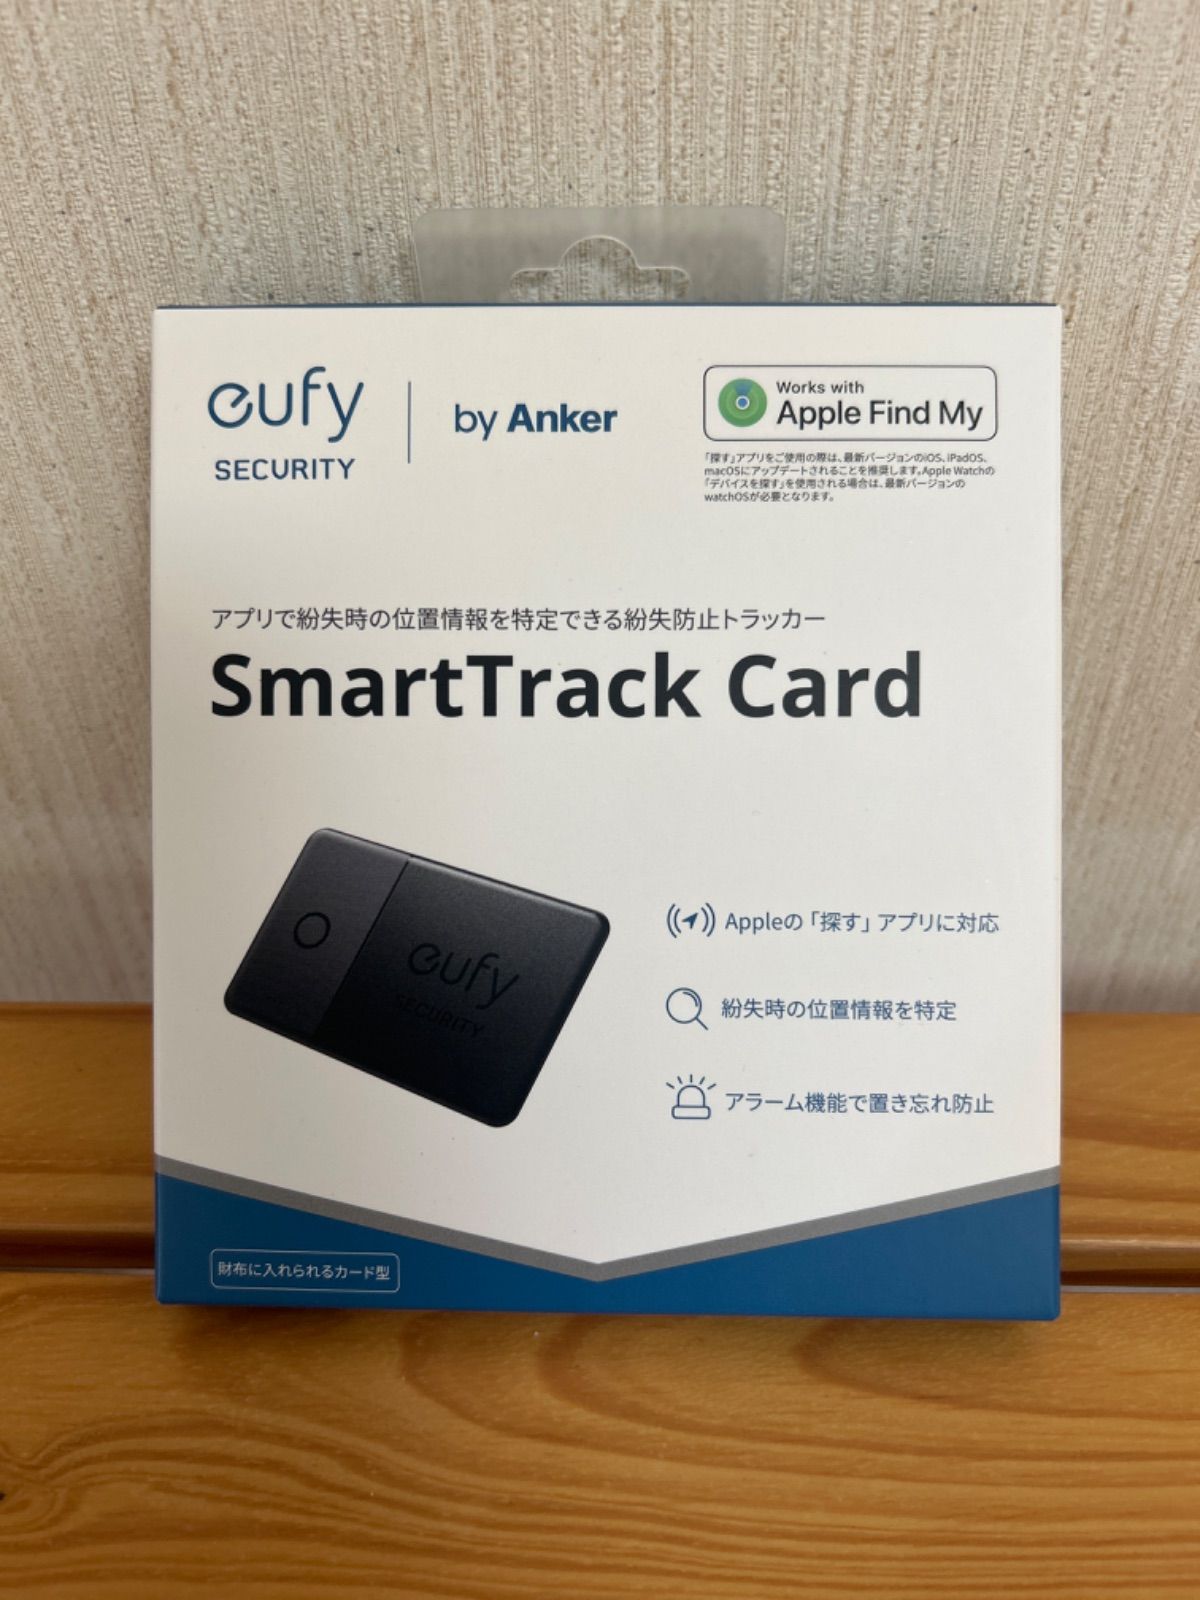 Anker Eufy Security SmartTrack Card アンカー ユーフィ セキュリティ